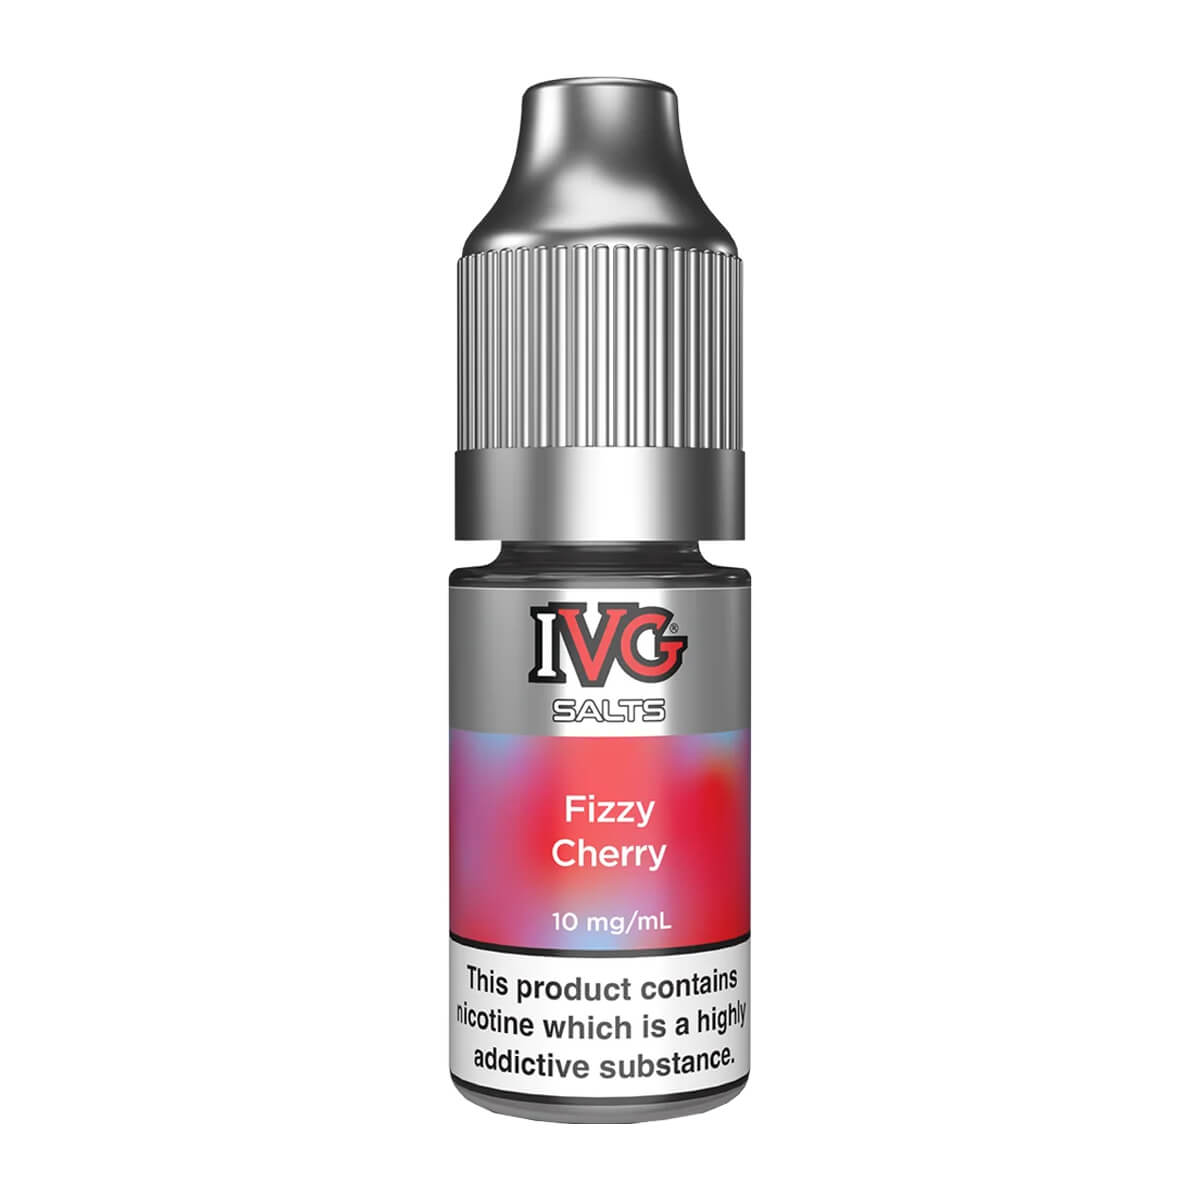 Fizzy Cherry Nic Salt E-Liquid by IVG